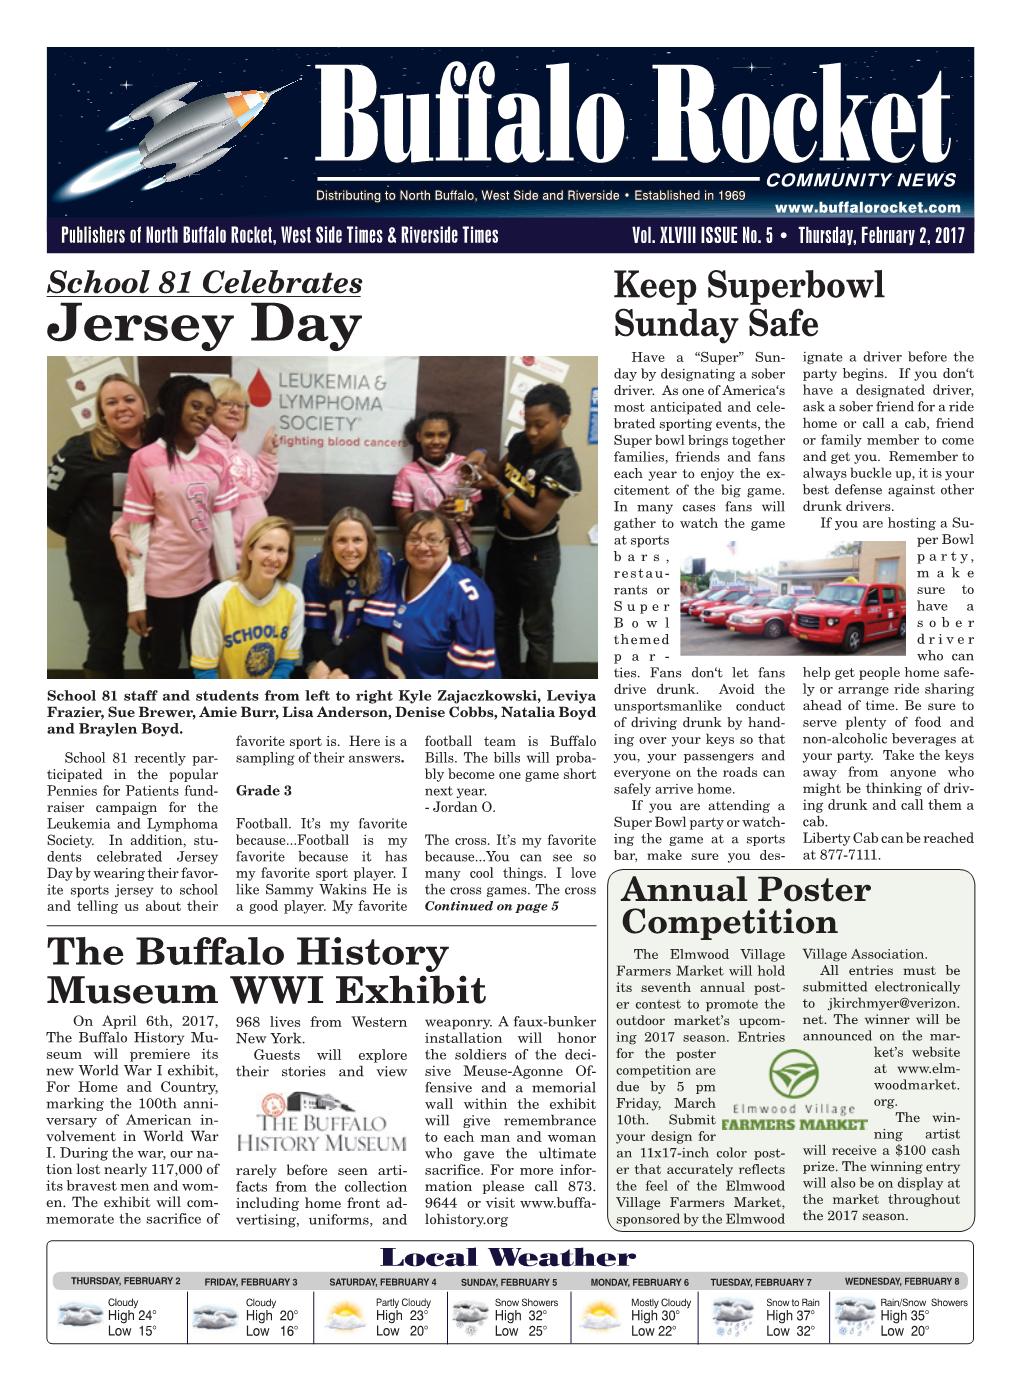 2017 Buffalo Rocket Issue 5 Page 3